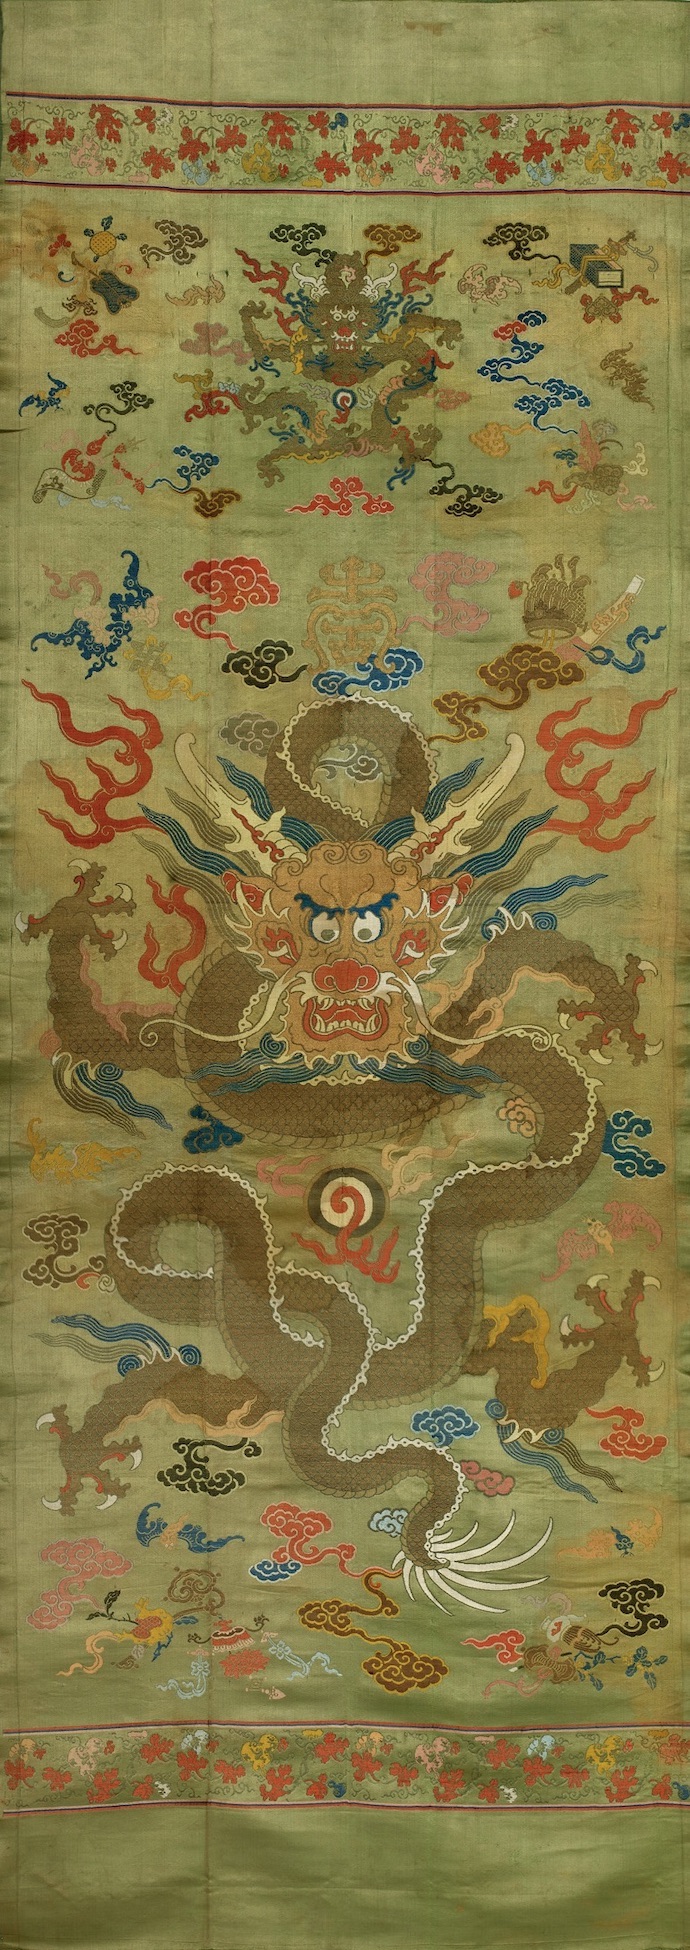 Brocade imperial quilt panel, Yongzheng period, 1723-35. 216 x 76.5 cm